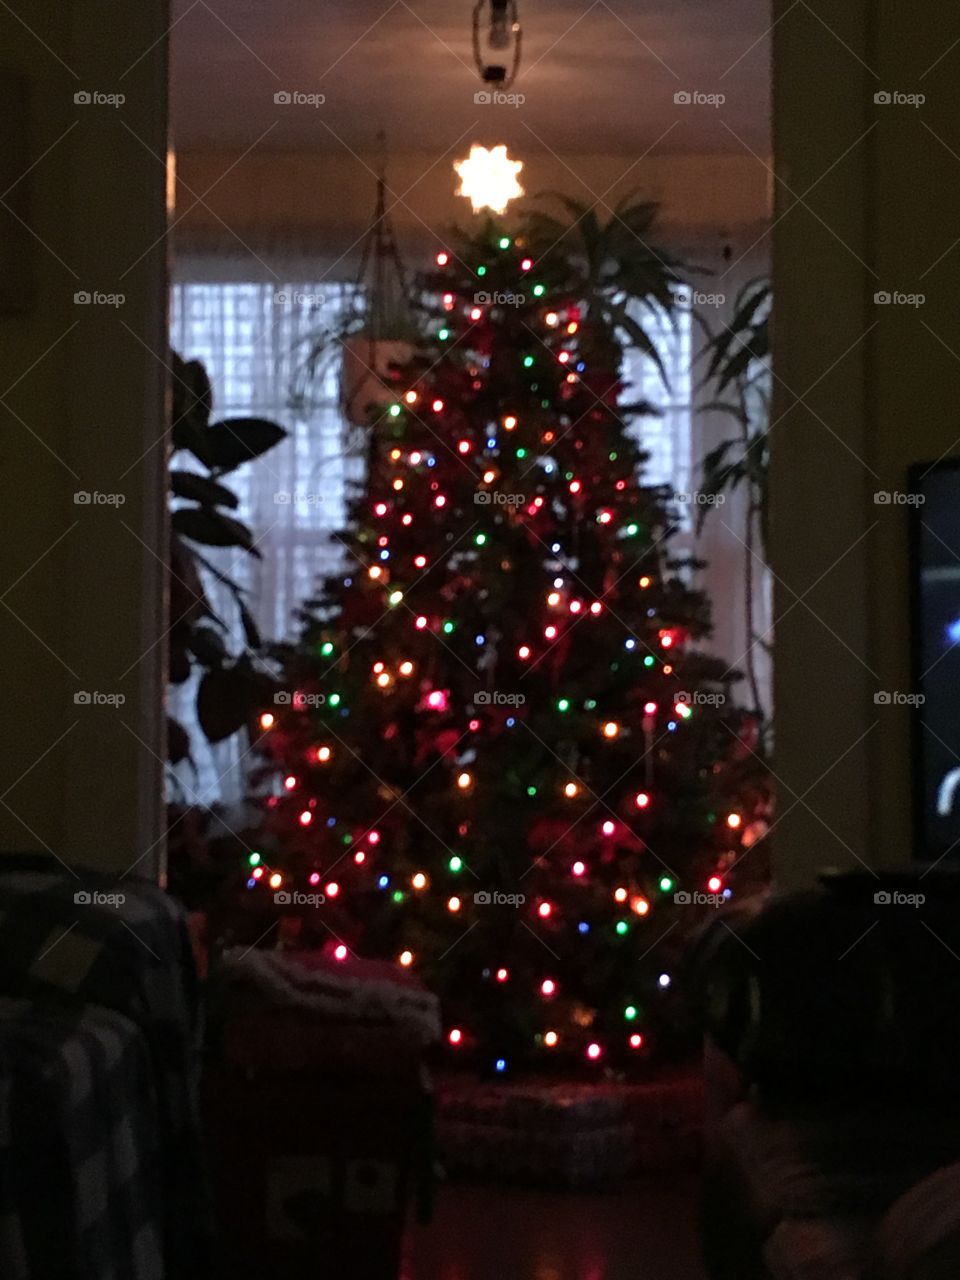 Blurry Christmas Tree lights